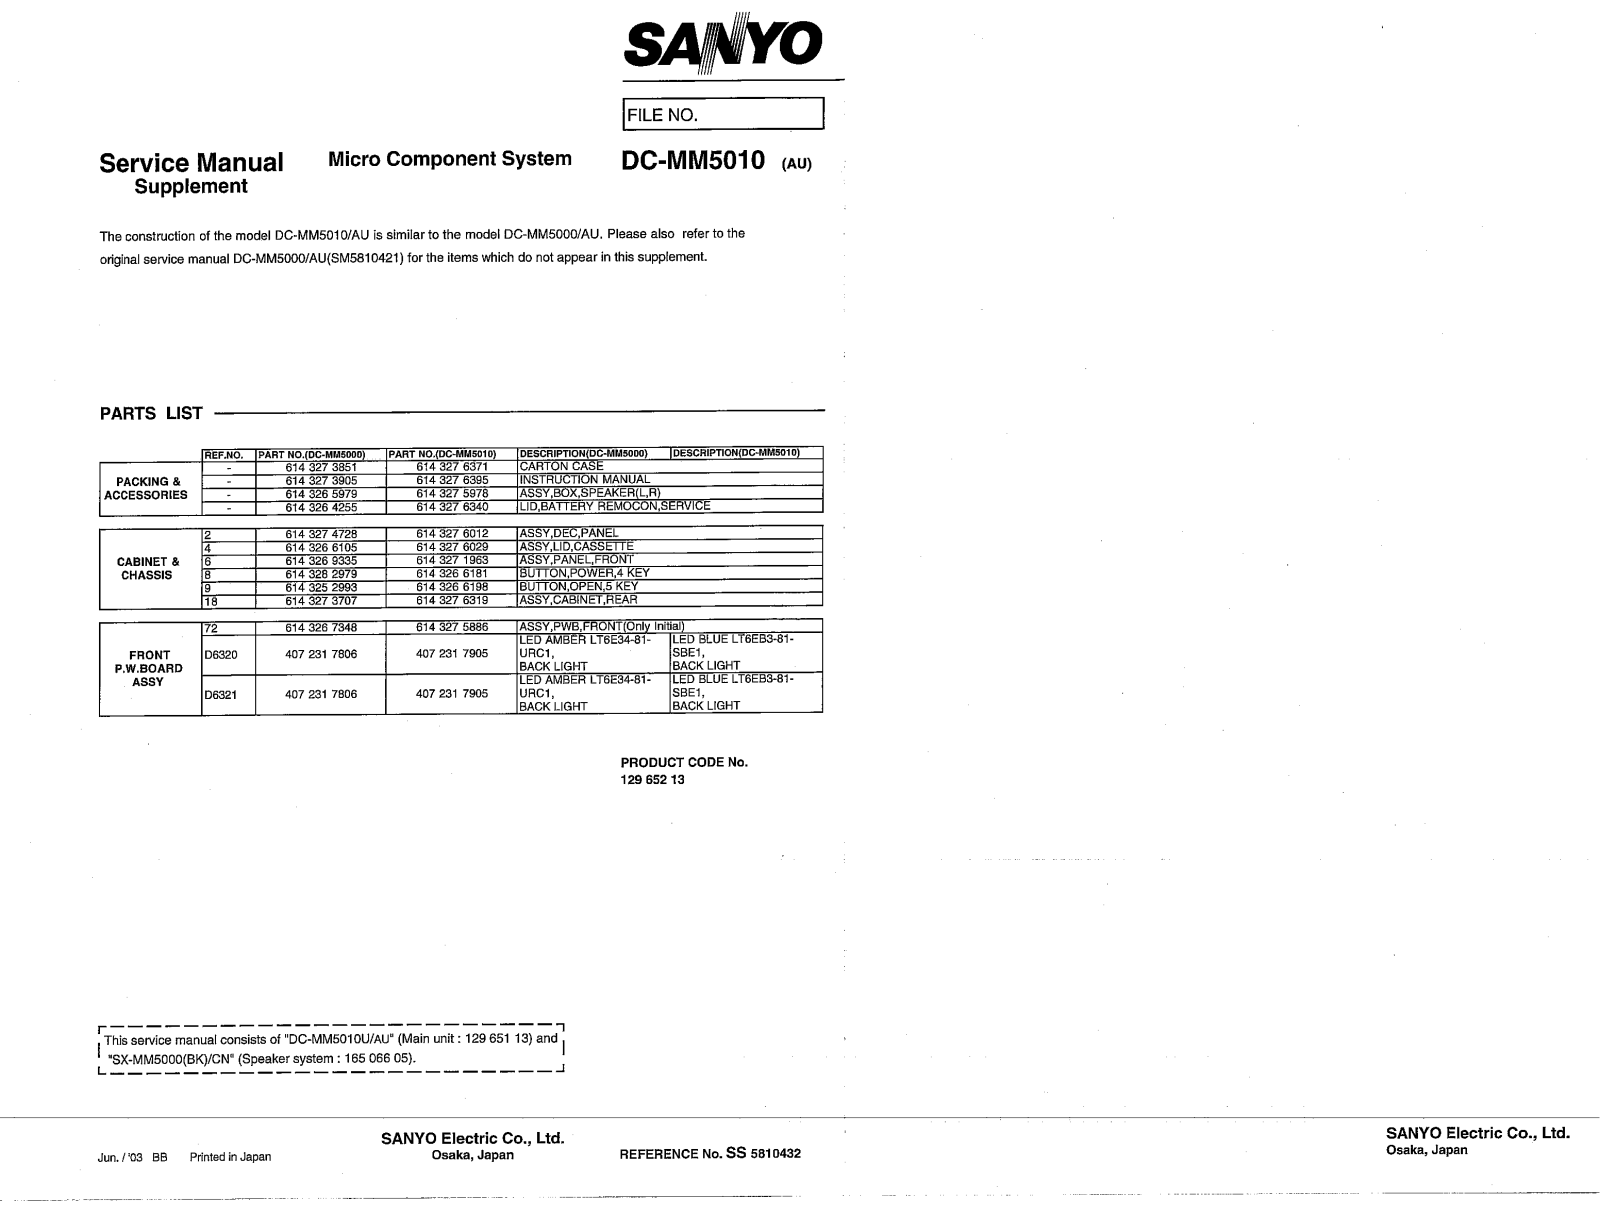 Sanyo DC MM5010 Service Manual